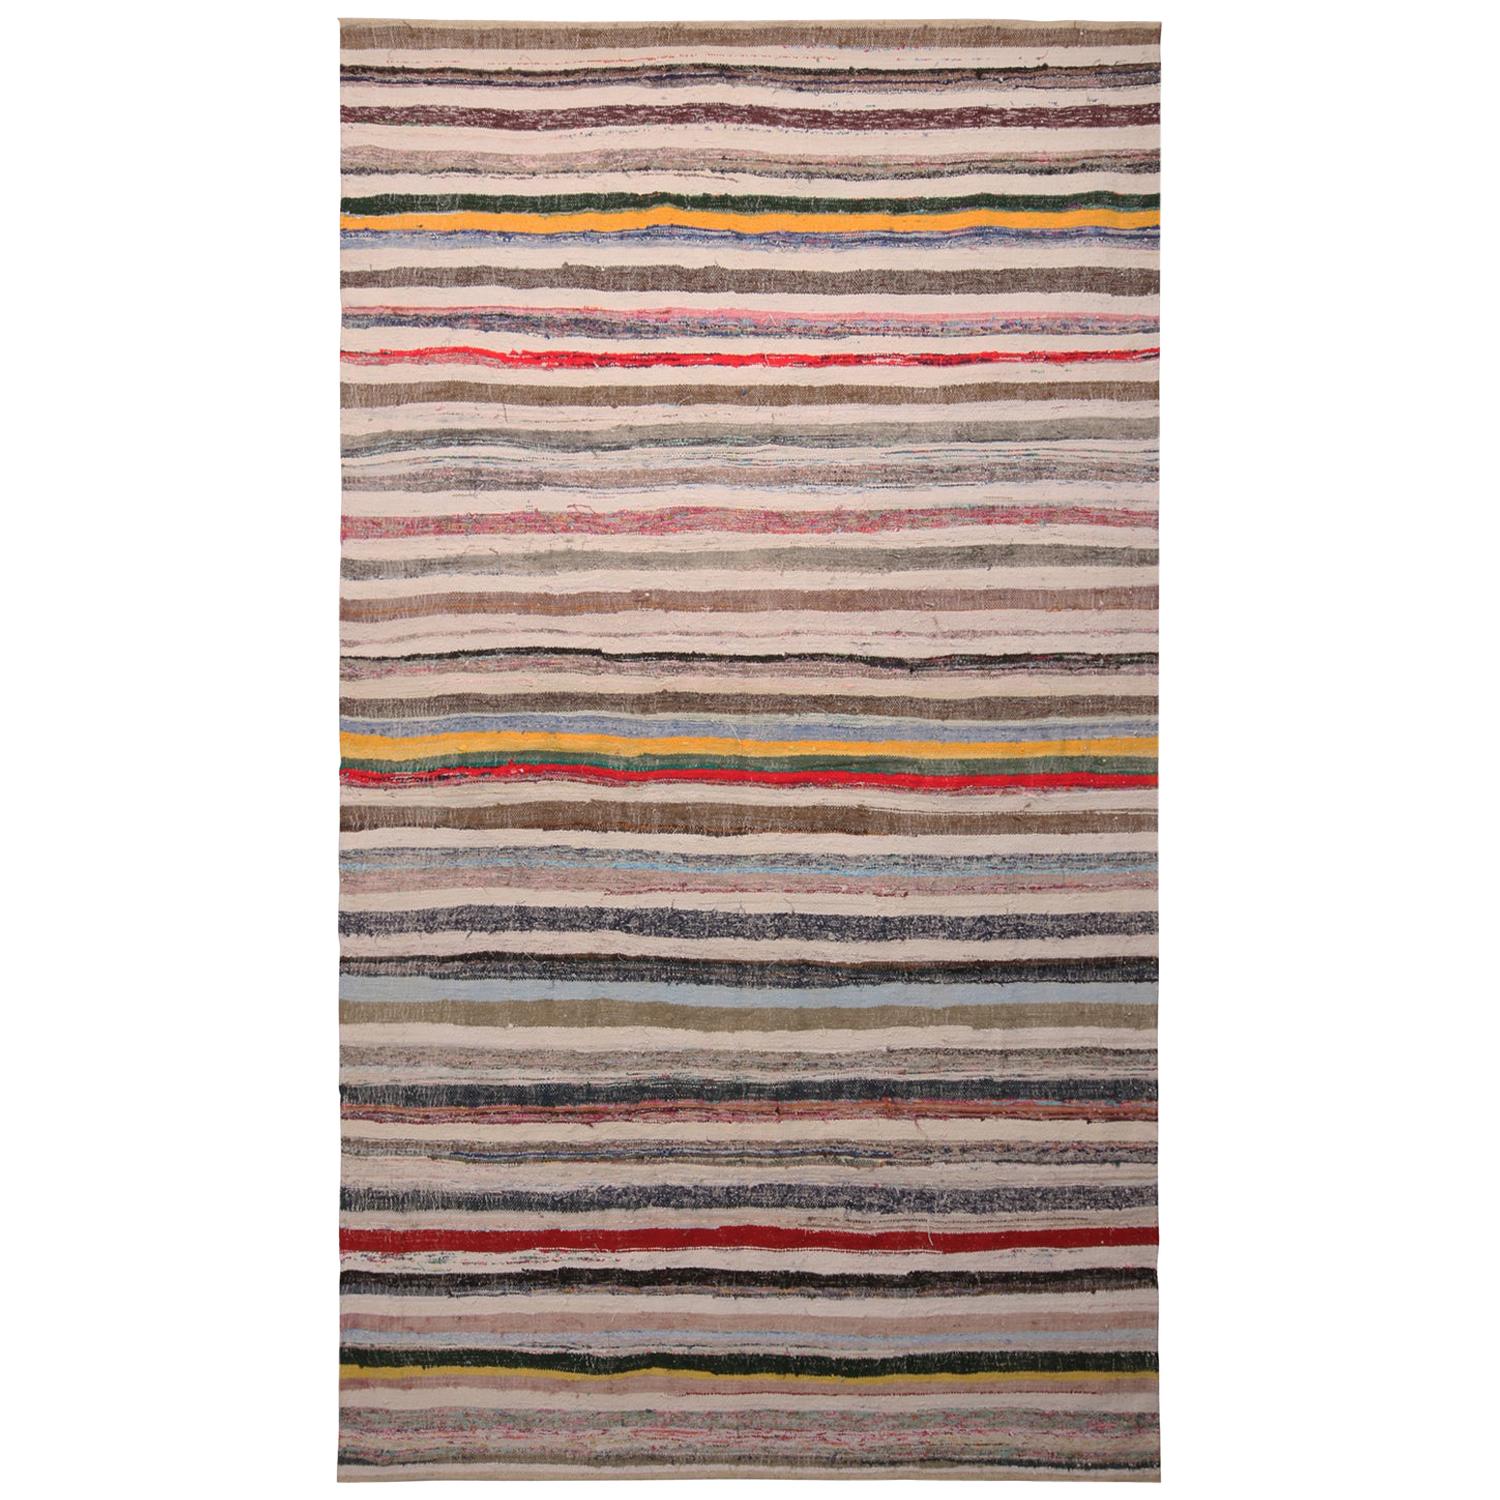 Vintage Striped Beige Brown and Multi-Color Wool Kilim Rug by Rug & kilim For Sale